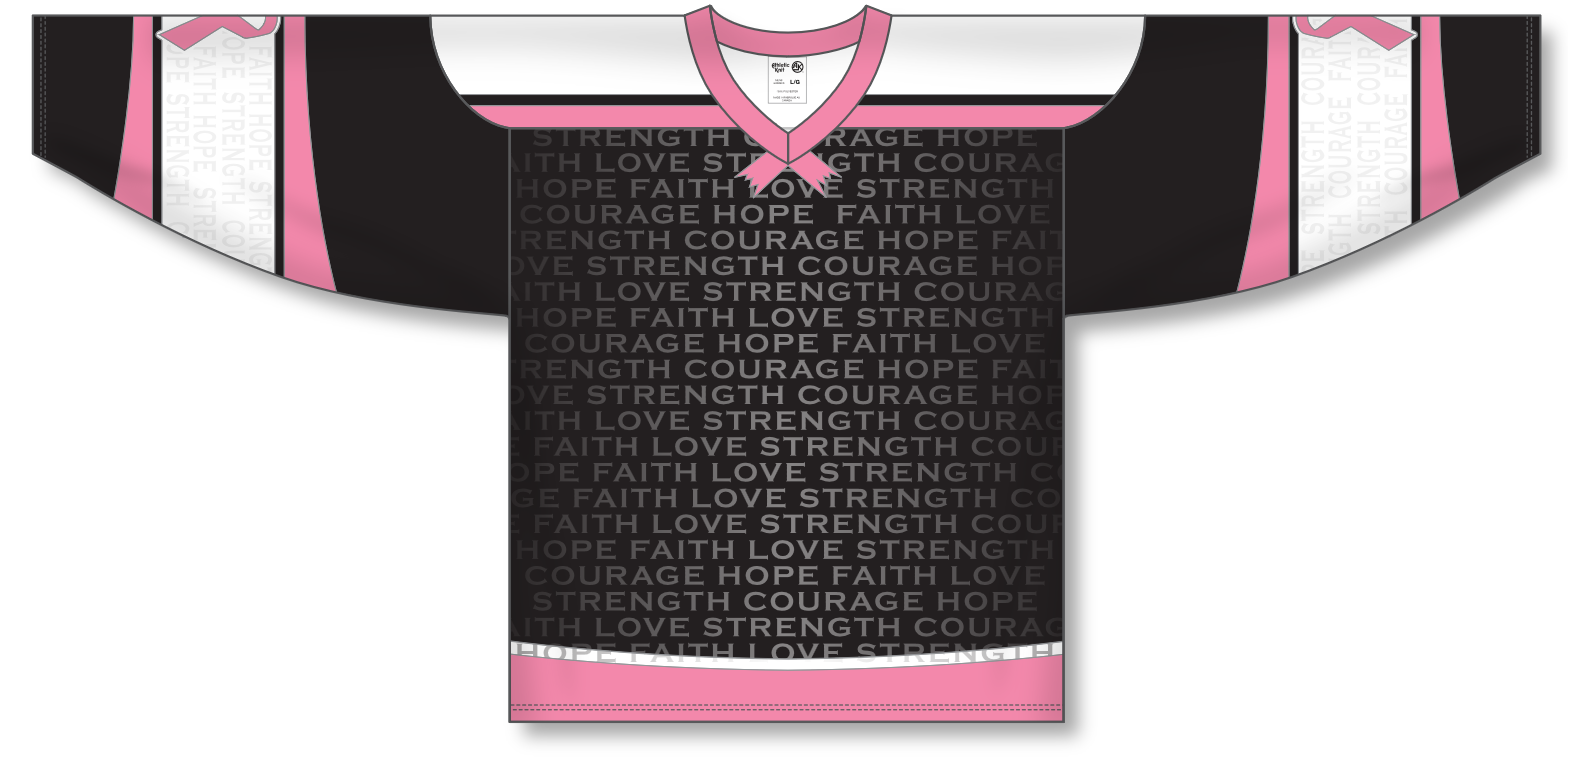 Carolina Hurricanes NHL Special Pink Breast Cancer Hockey Jersey